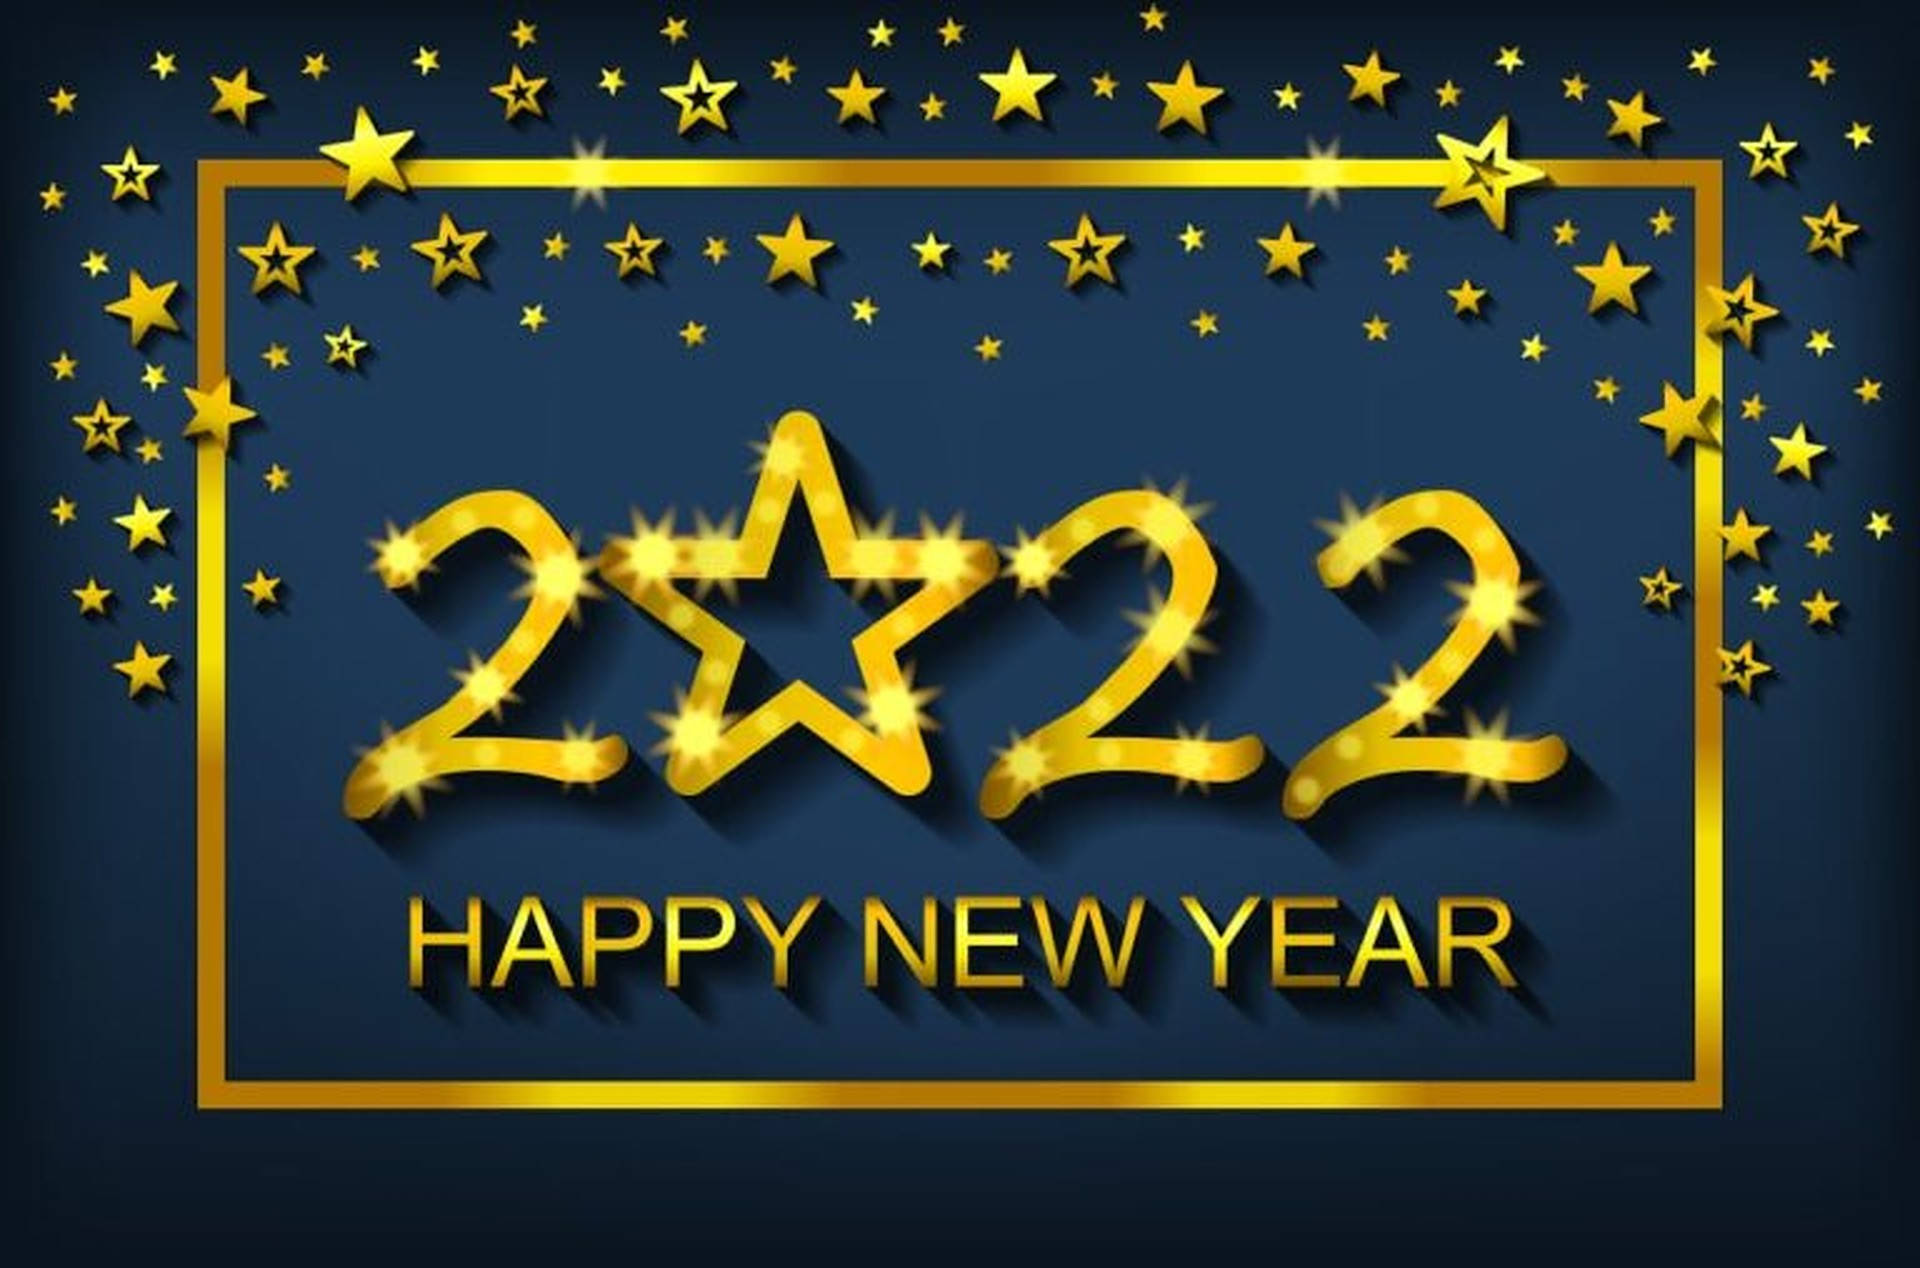 Golden Star Happy New Year 2022